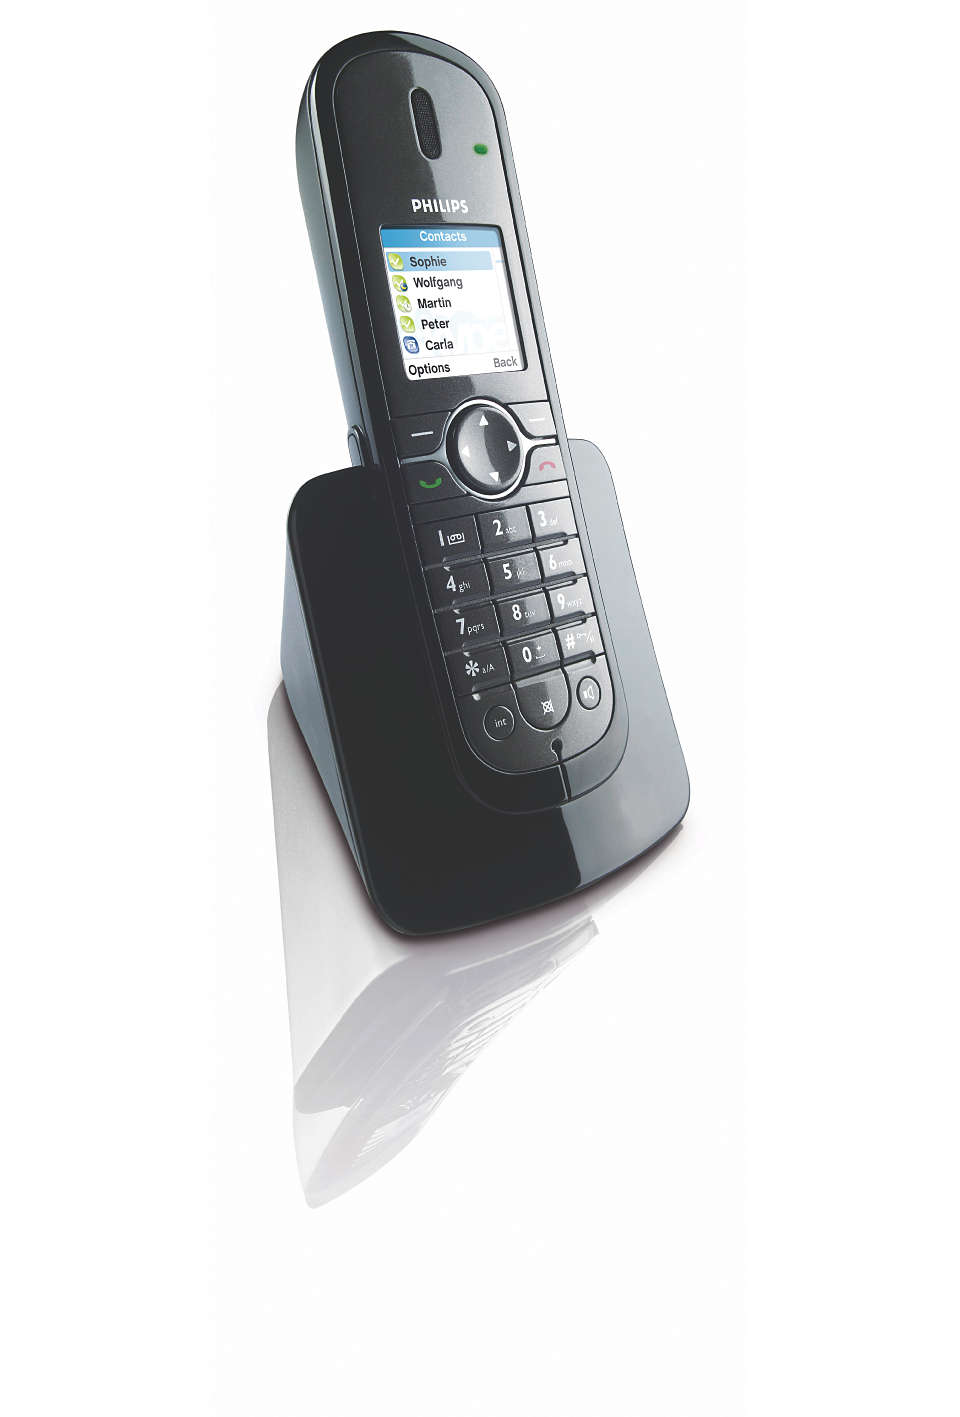 Skype™ and landline calls easily